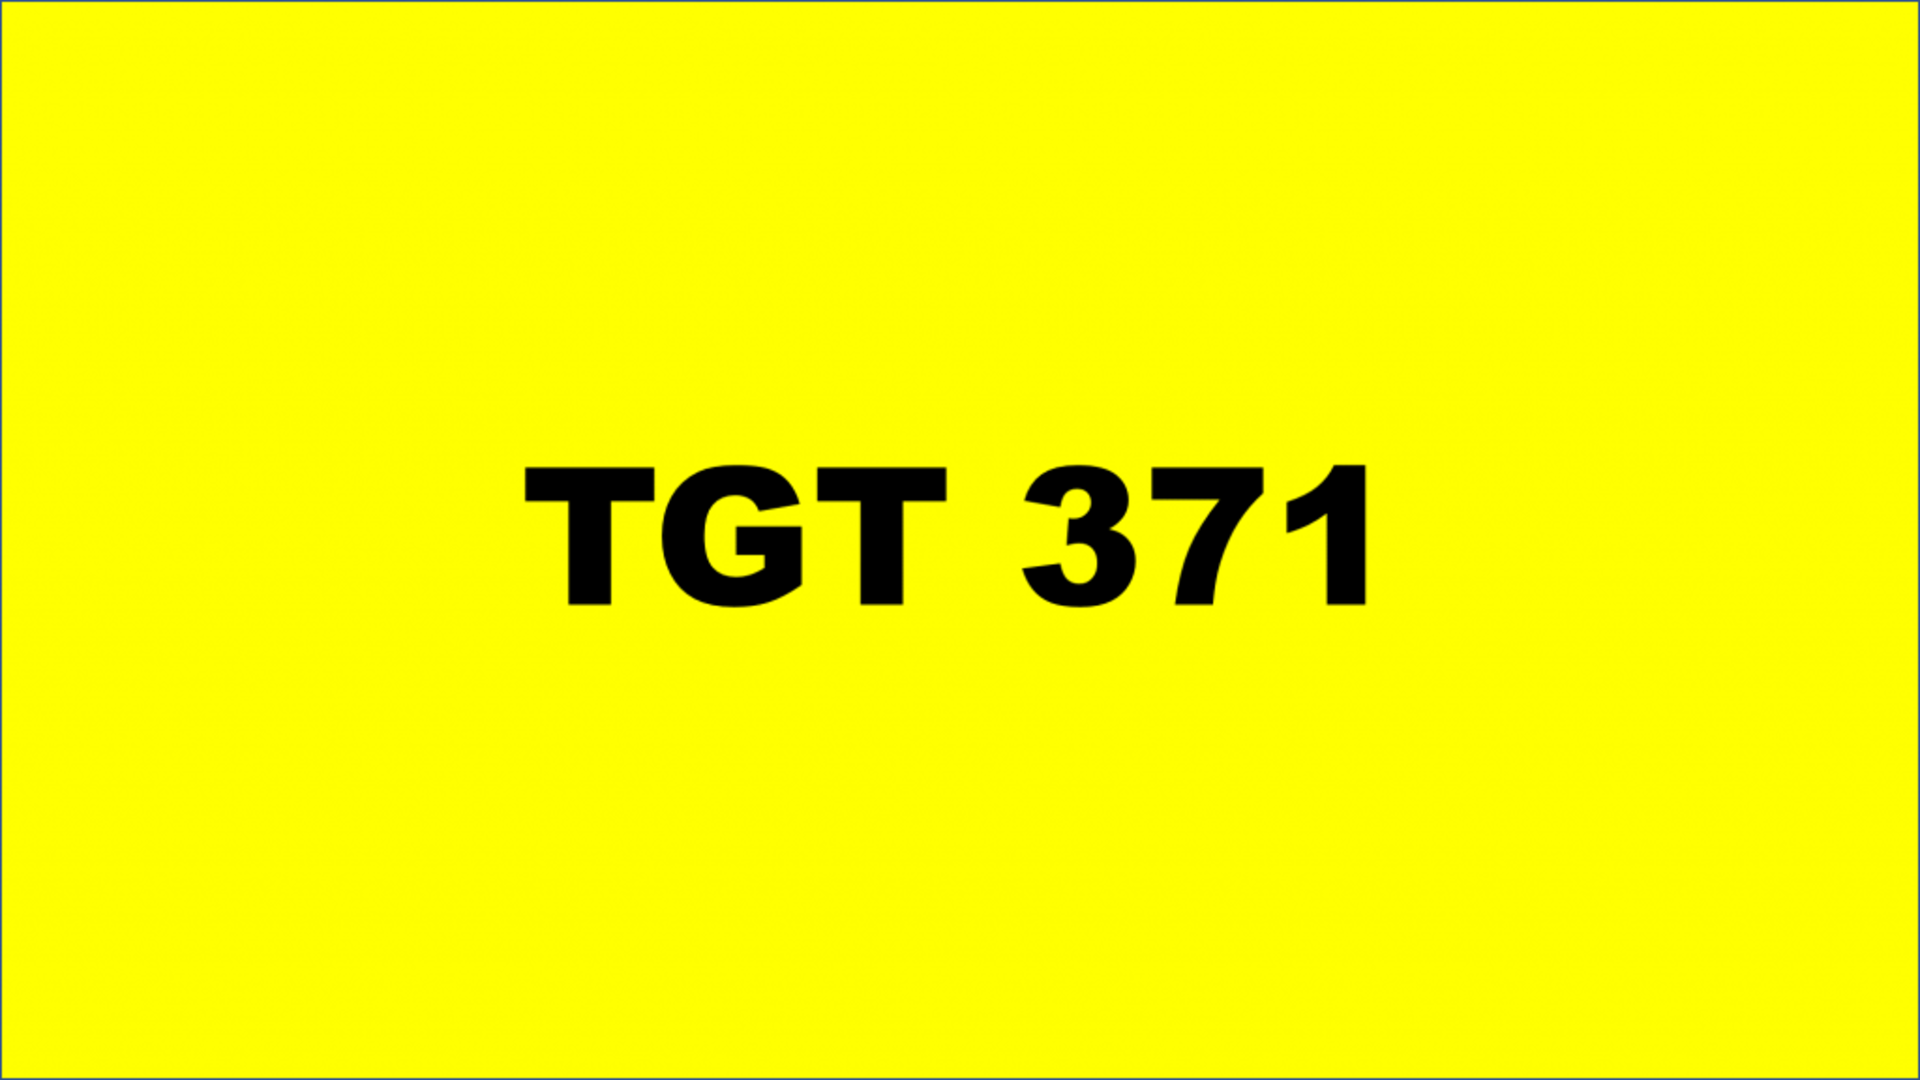 REGISTRATION - TGT 371